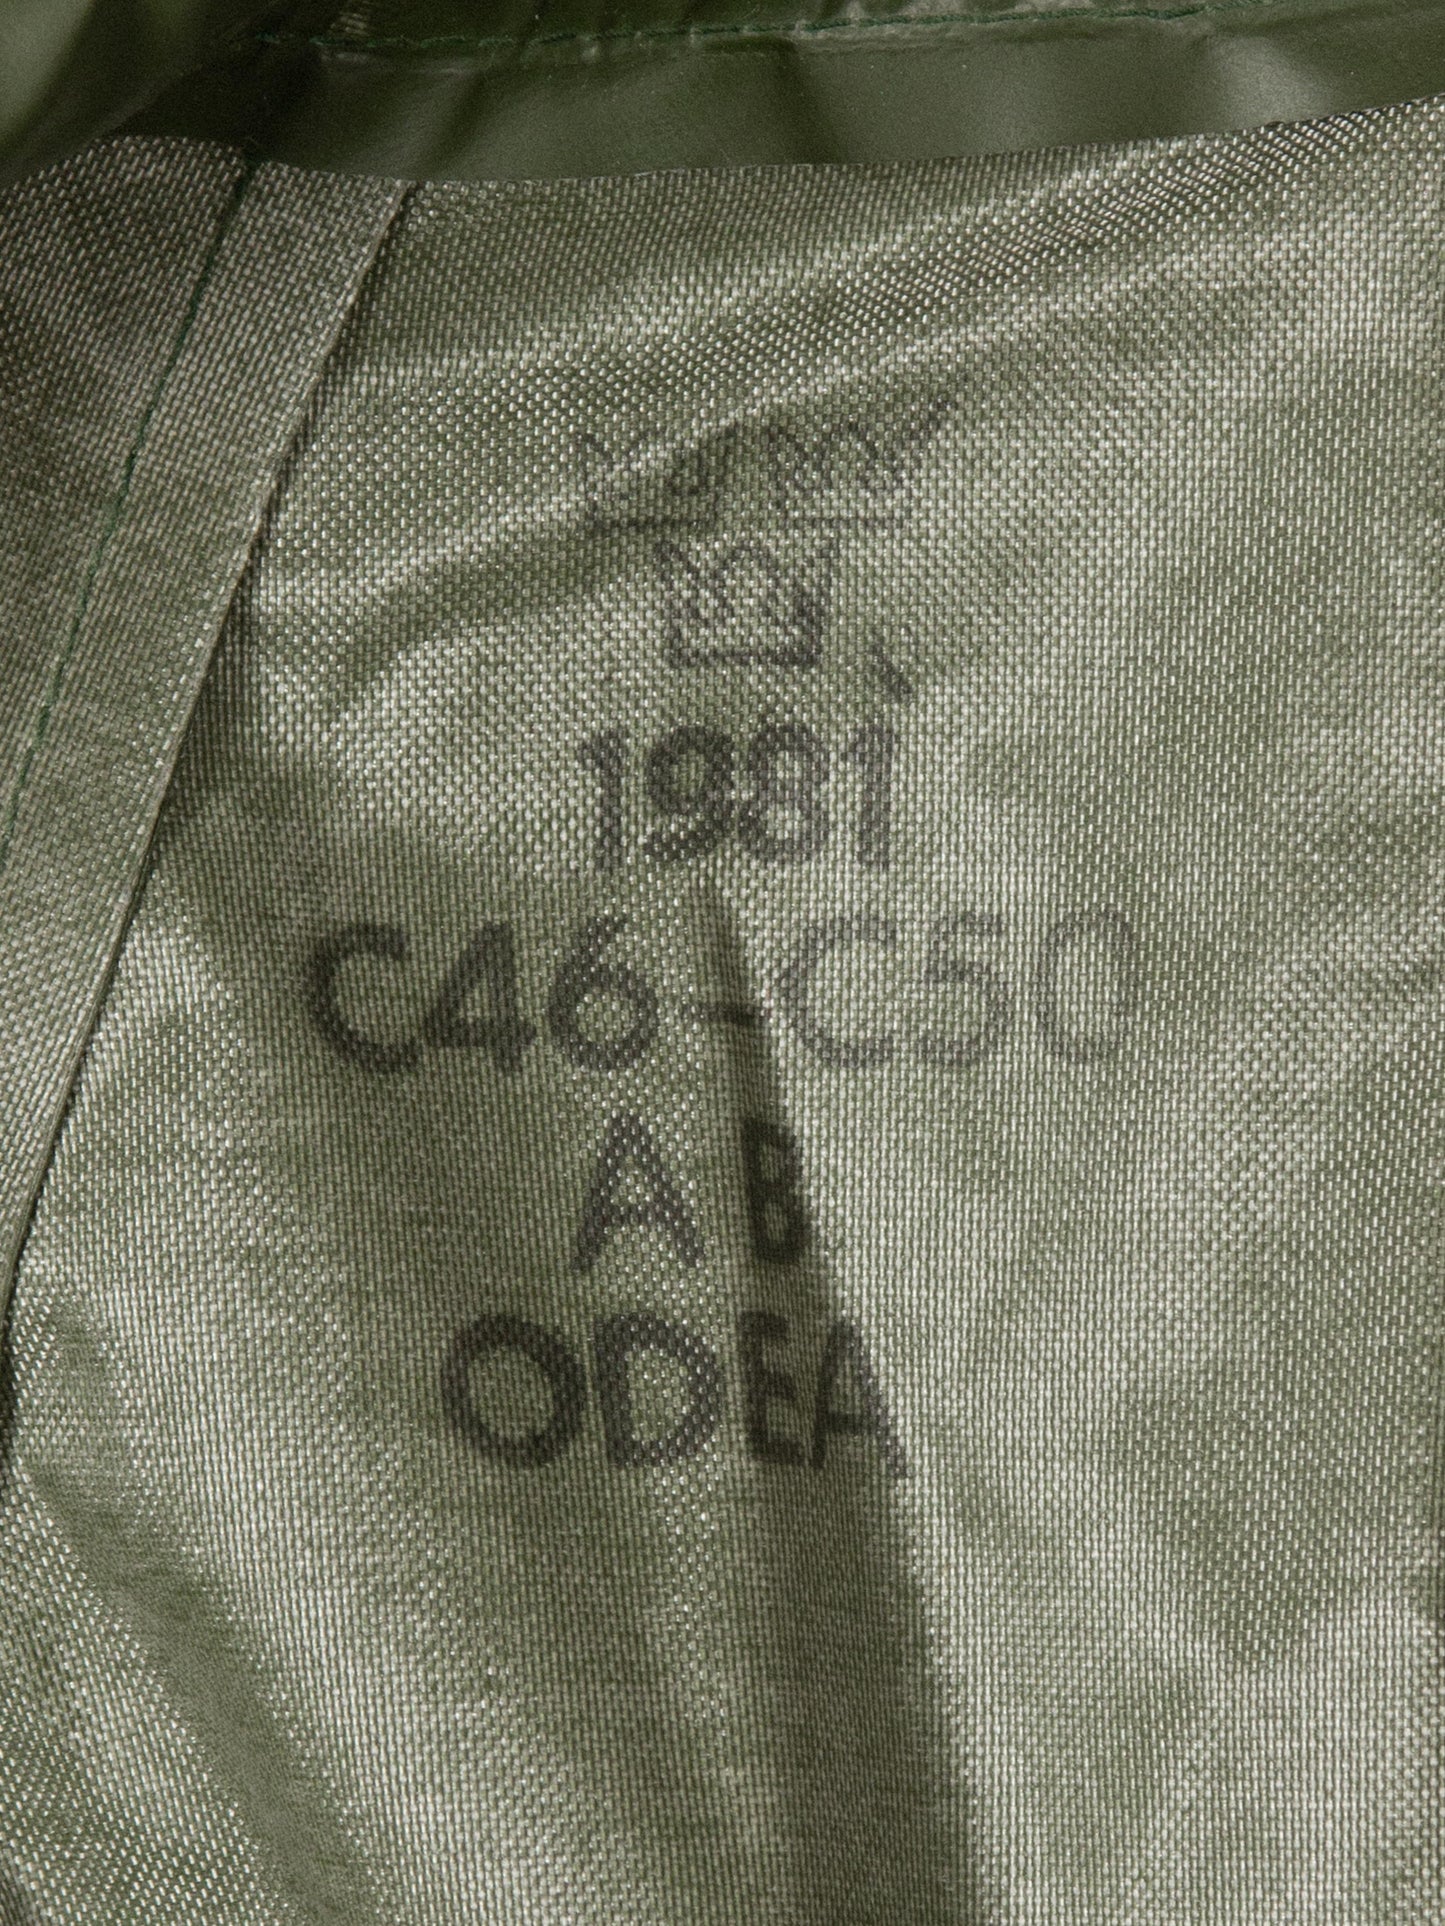 Vtg 1980s Swedish Army Rain Coat